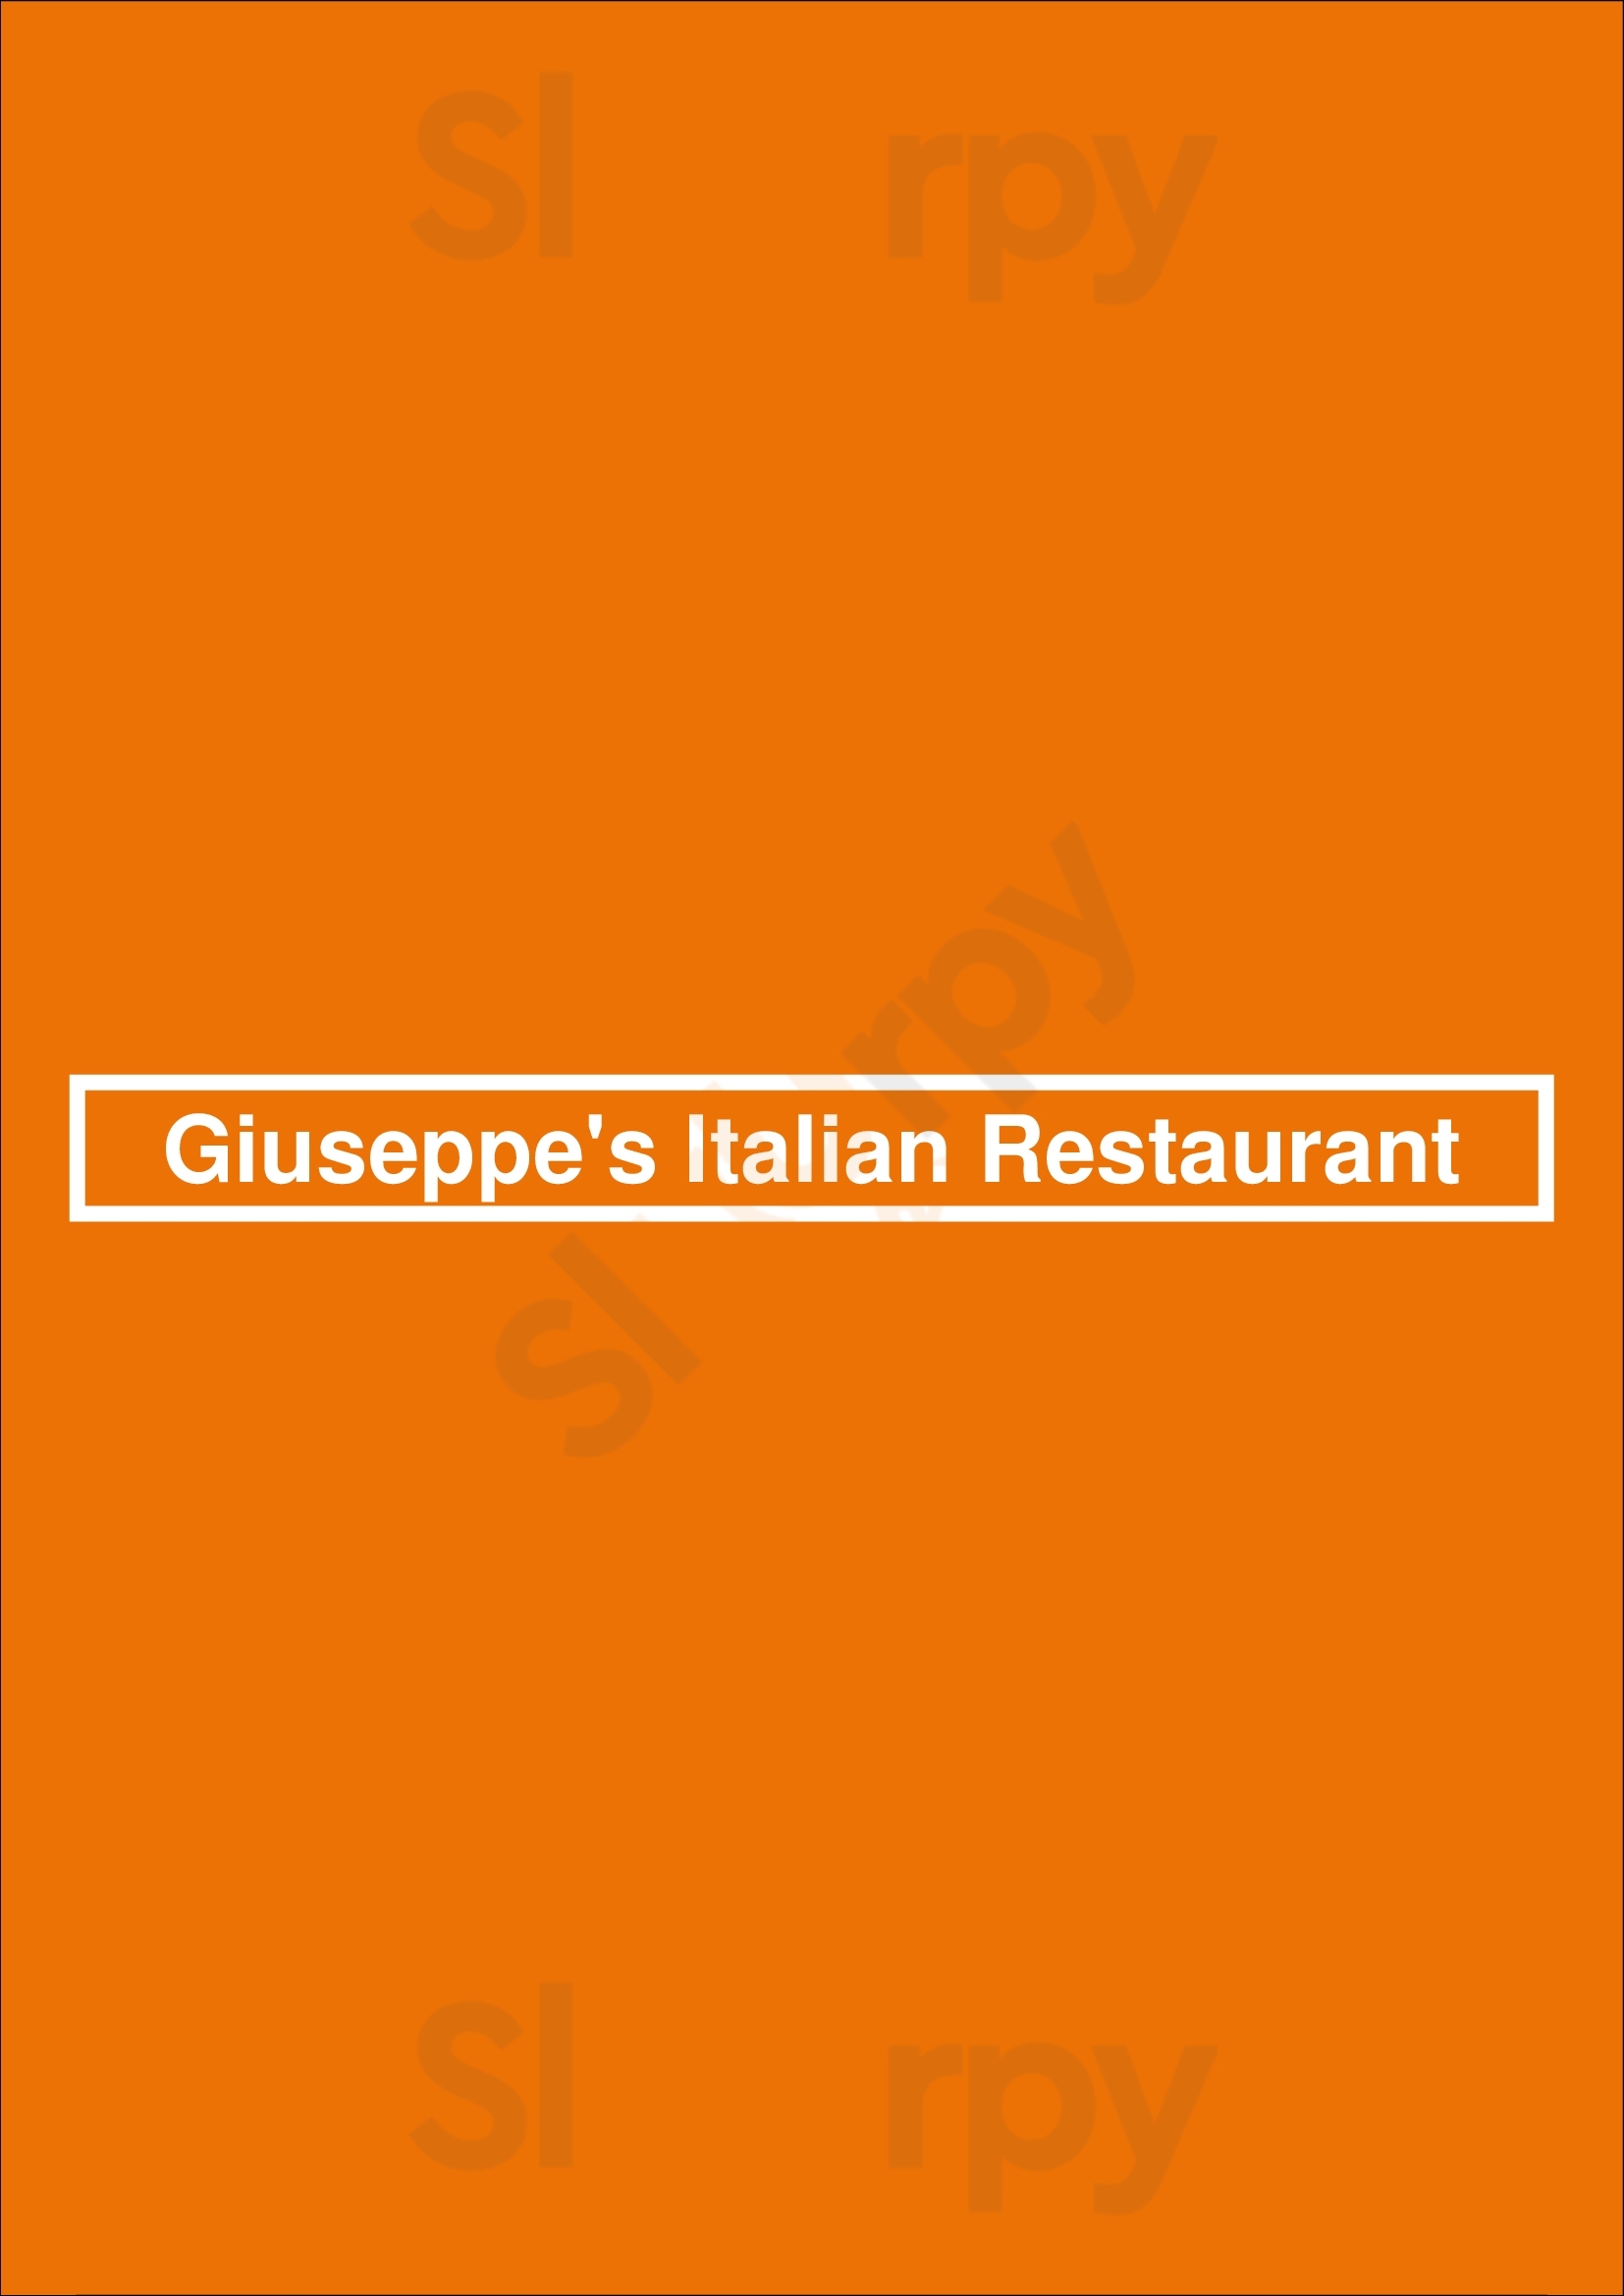 Giuseppe's Italian Restaurant Pasadena Menu - 1